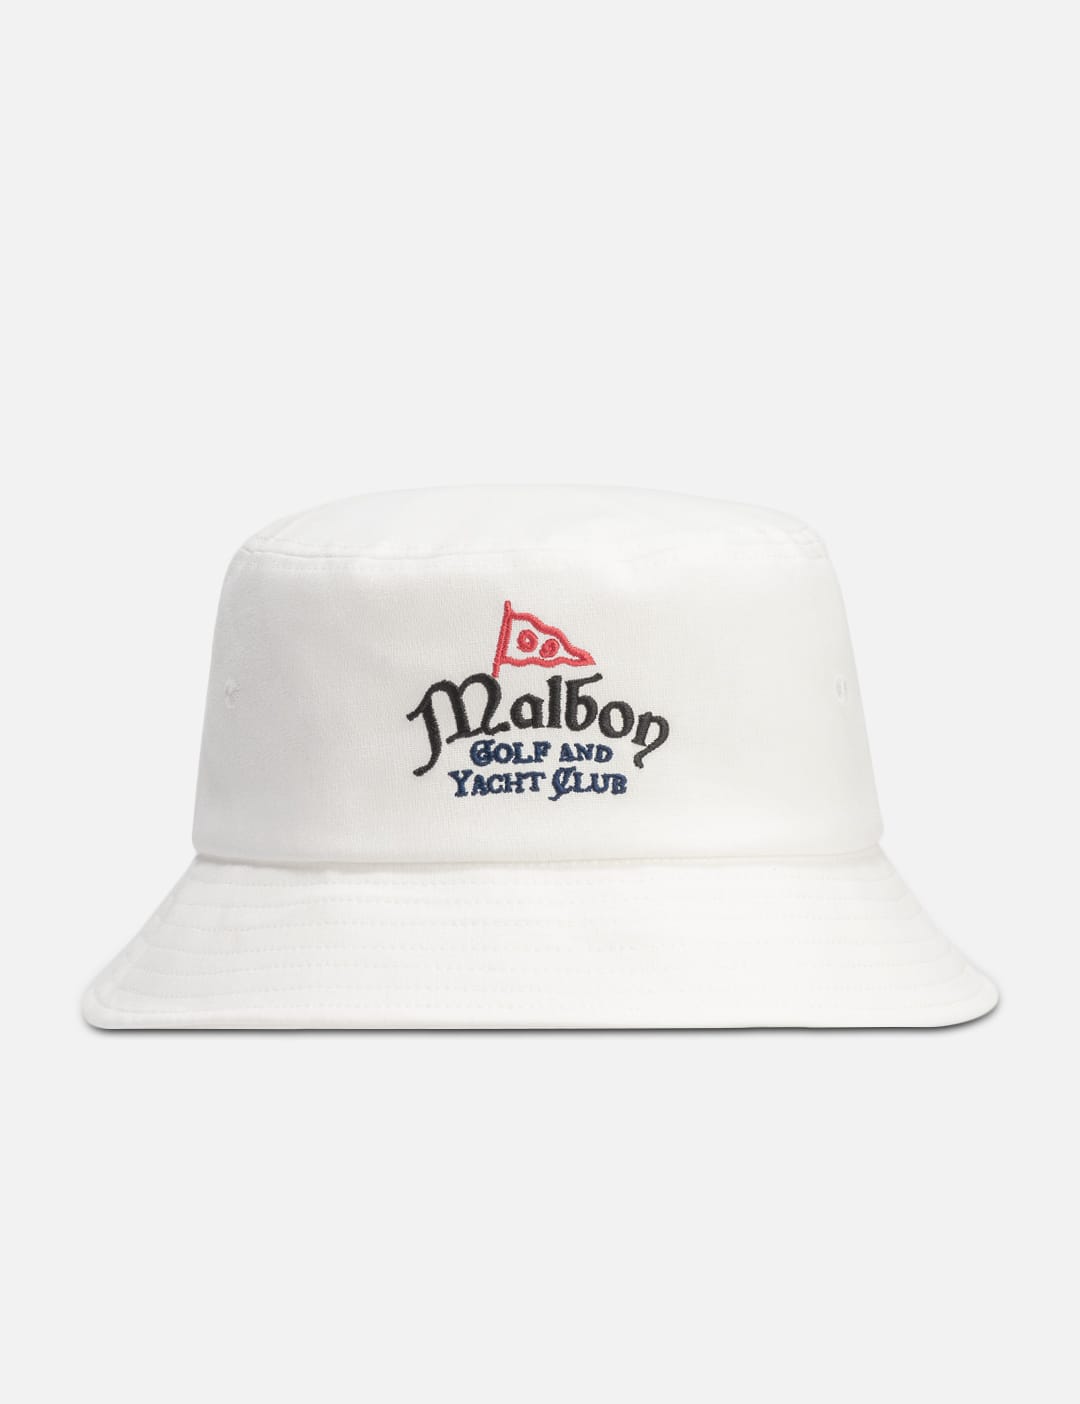 Malbon Golf - YACHT CLUB BUCKET HAT | HBX - Globally Curated Fashion and  Lifestyle by Hypebeast